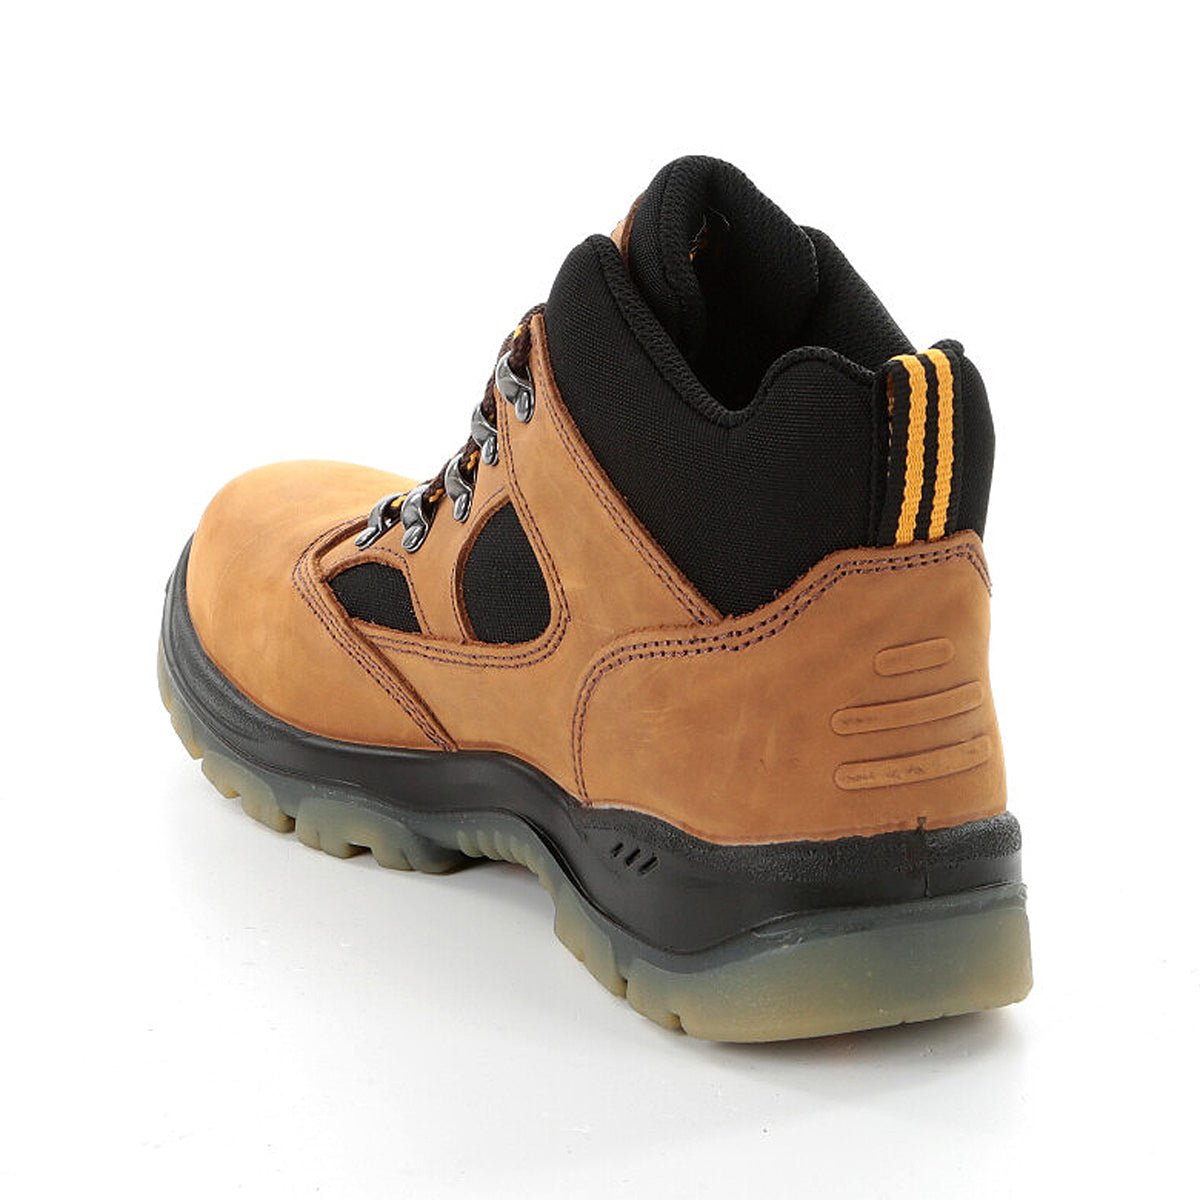 DeWalt Challenger Waterproof Safety Hiker Boots